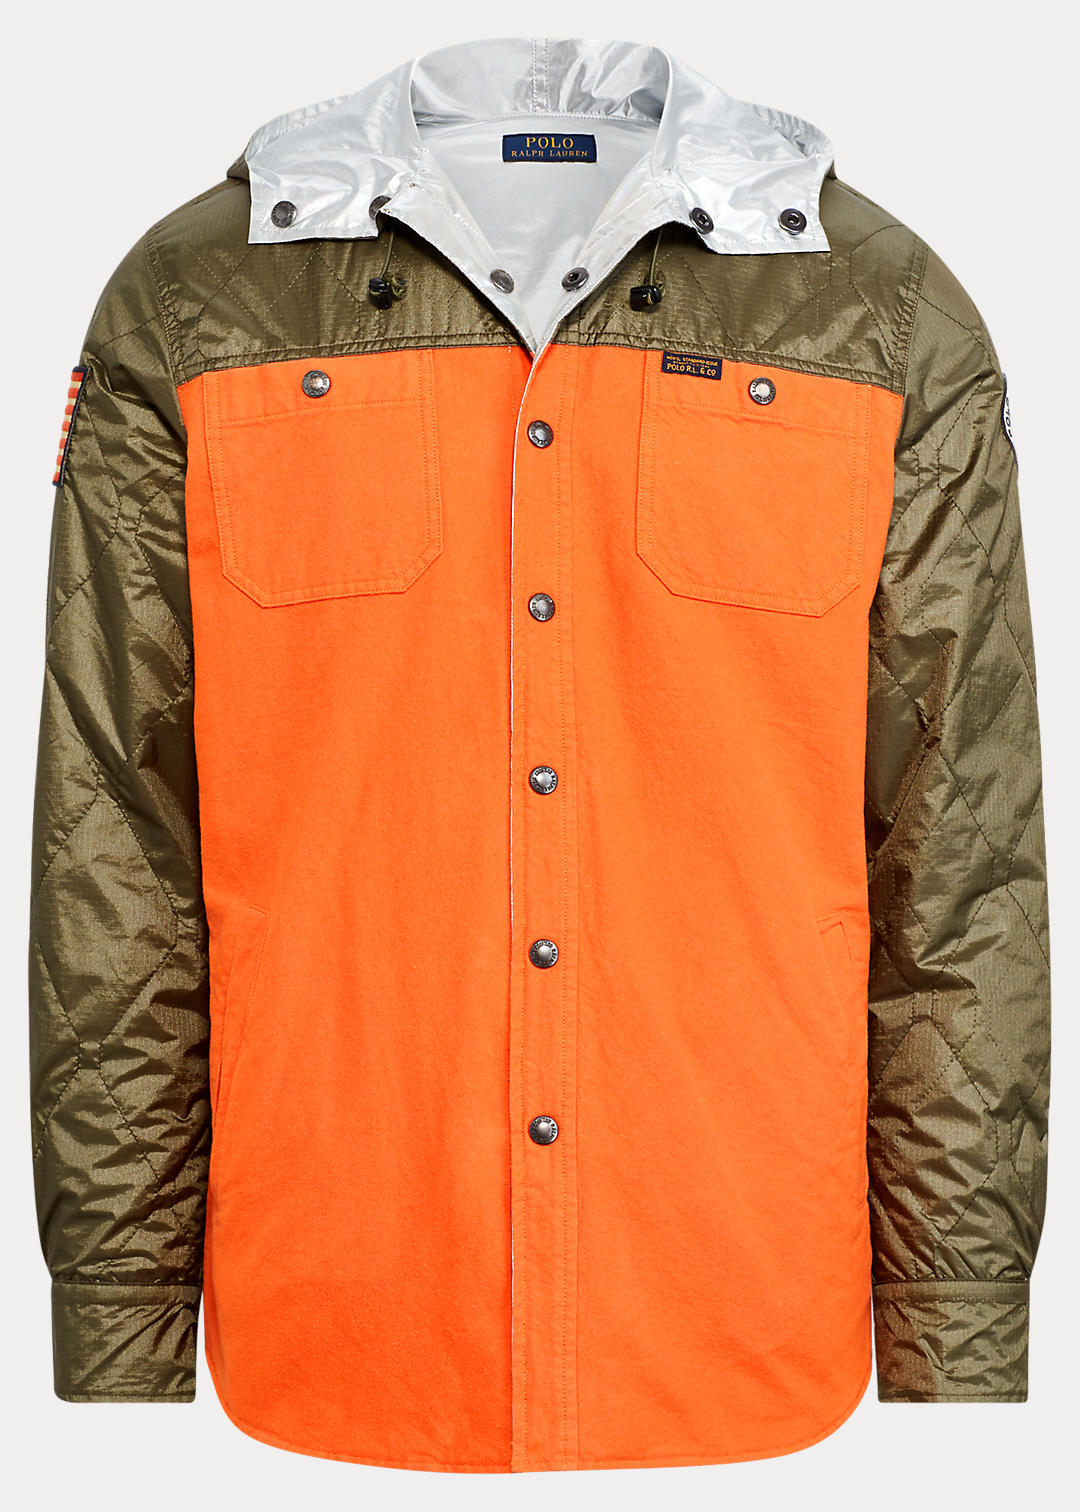 Polo Ralph Lauren Reversible Hooded Shirt Jacket 2